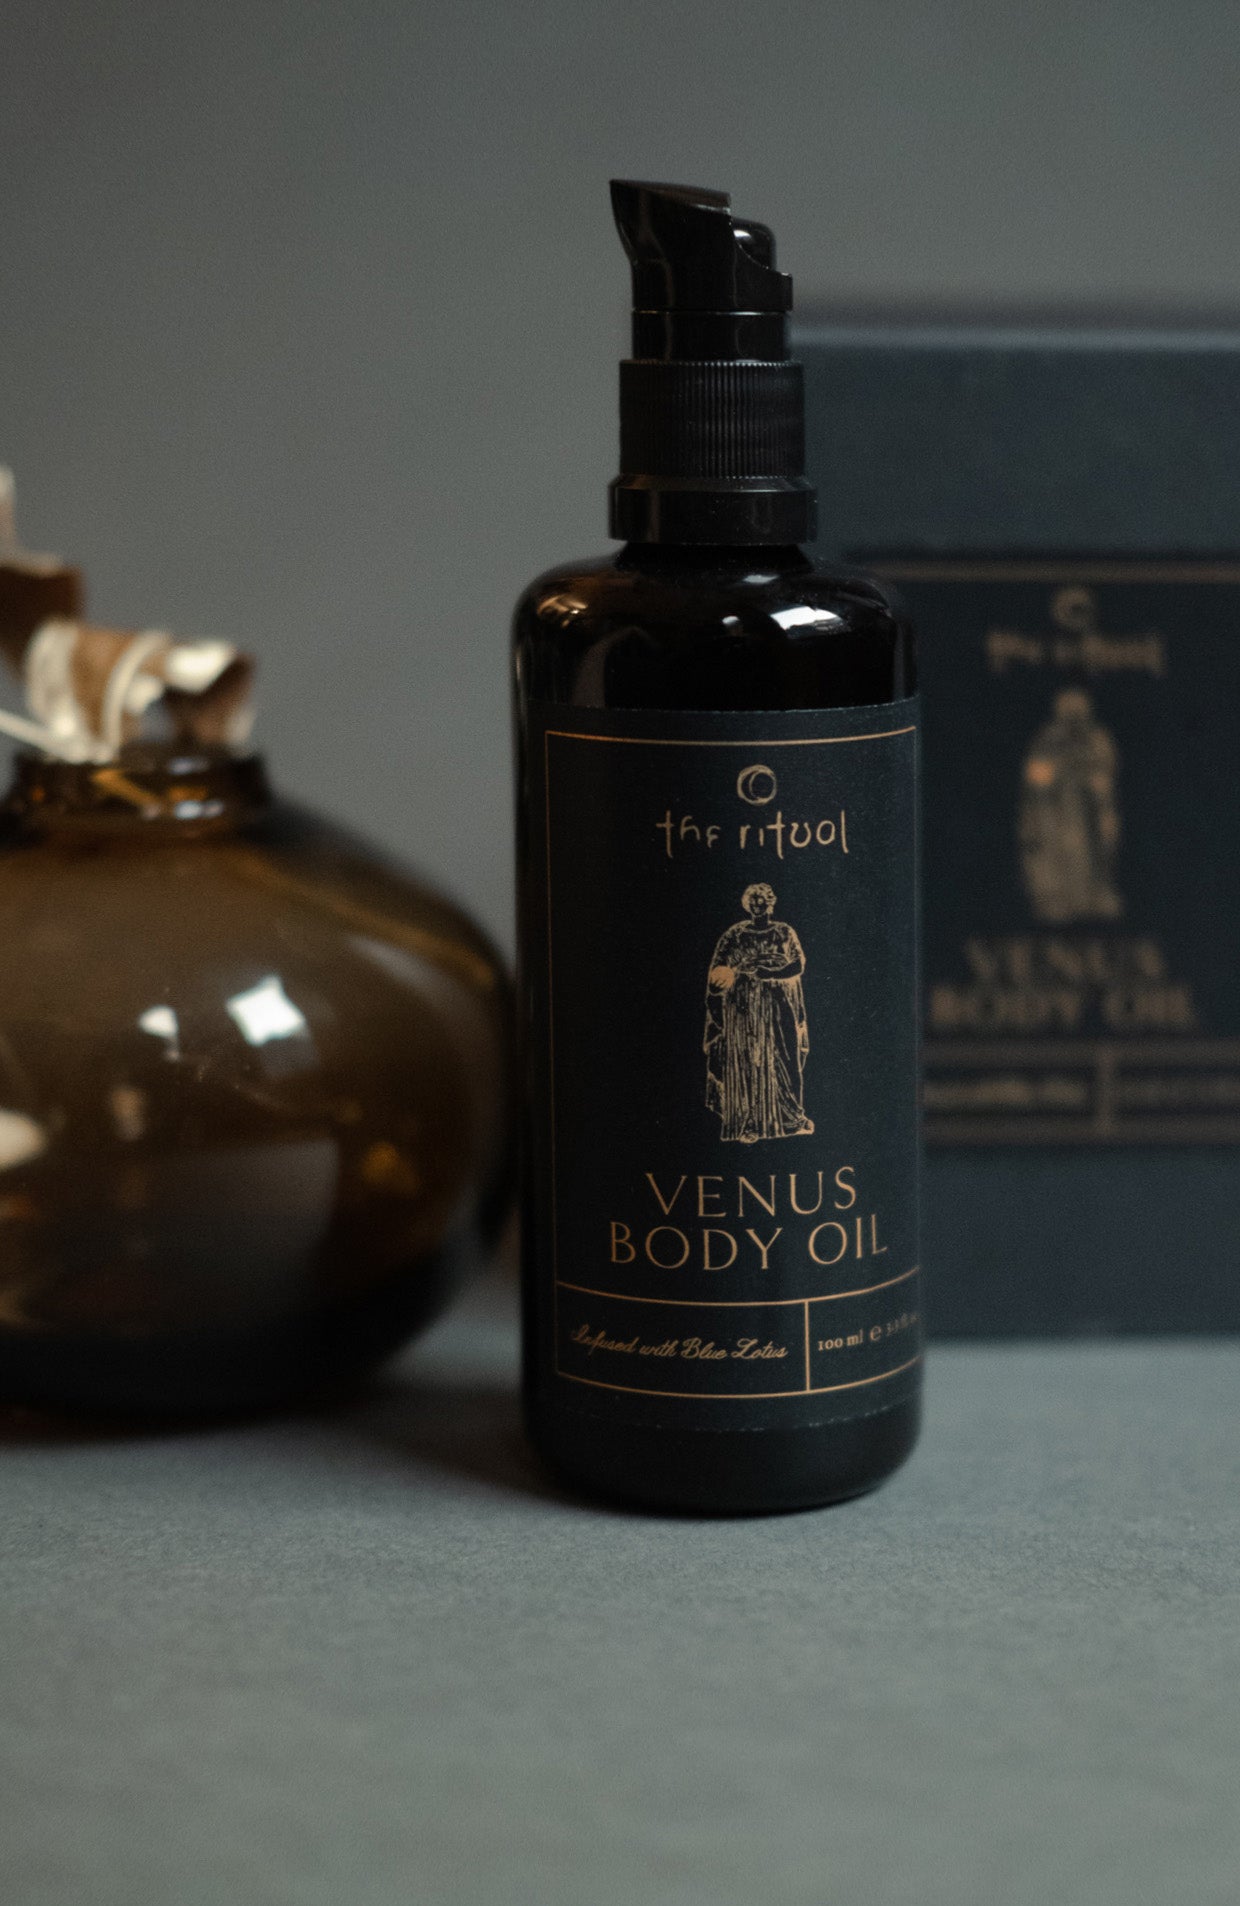 Venus Body Oil